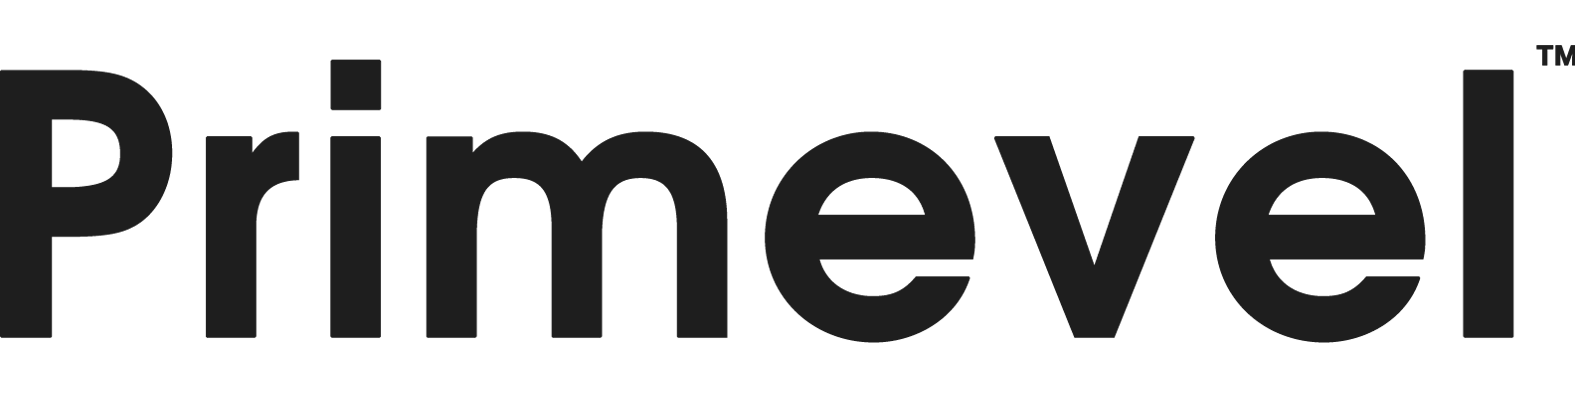 partnet-logo-1